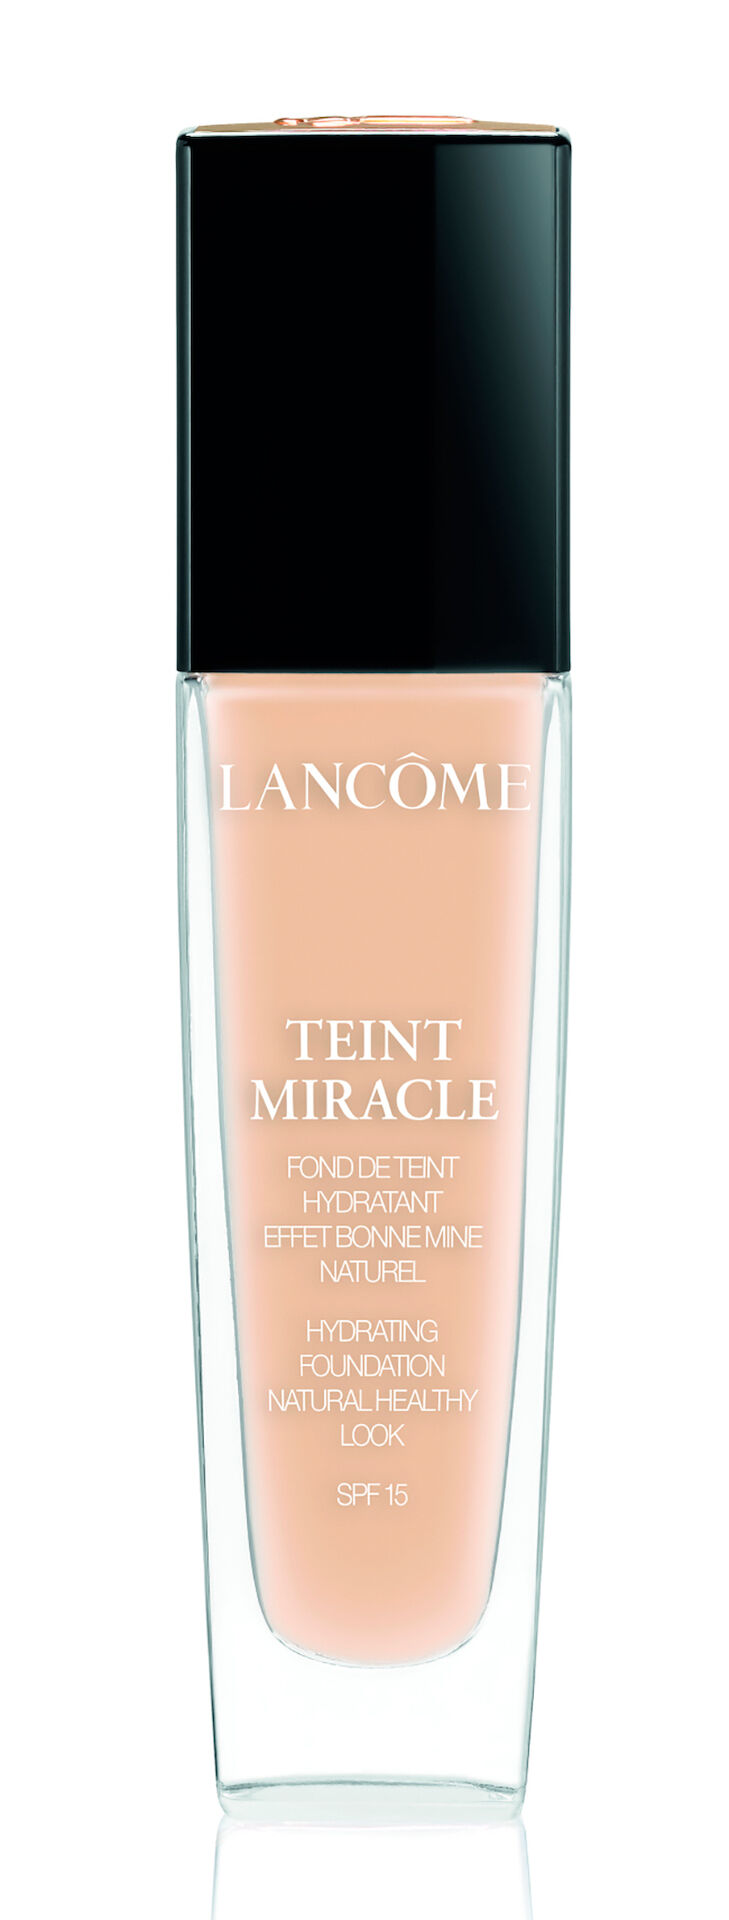 Lancôme Teint Miracle 01 Foundation